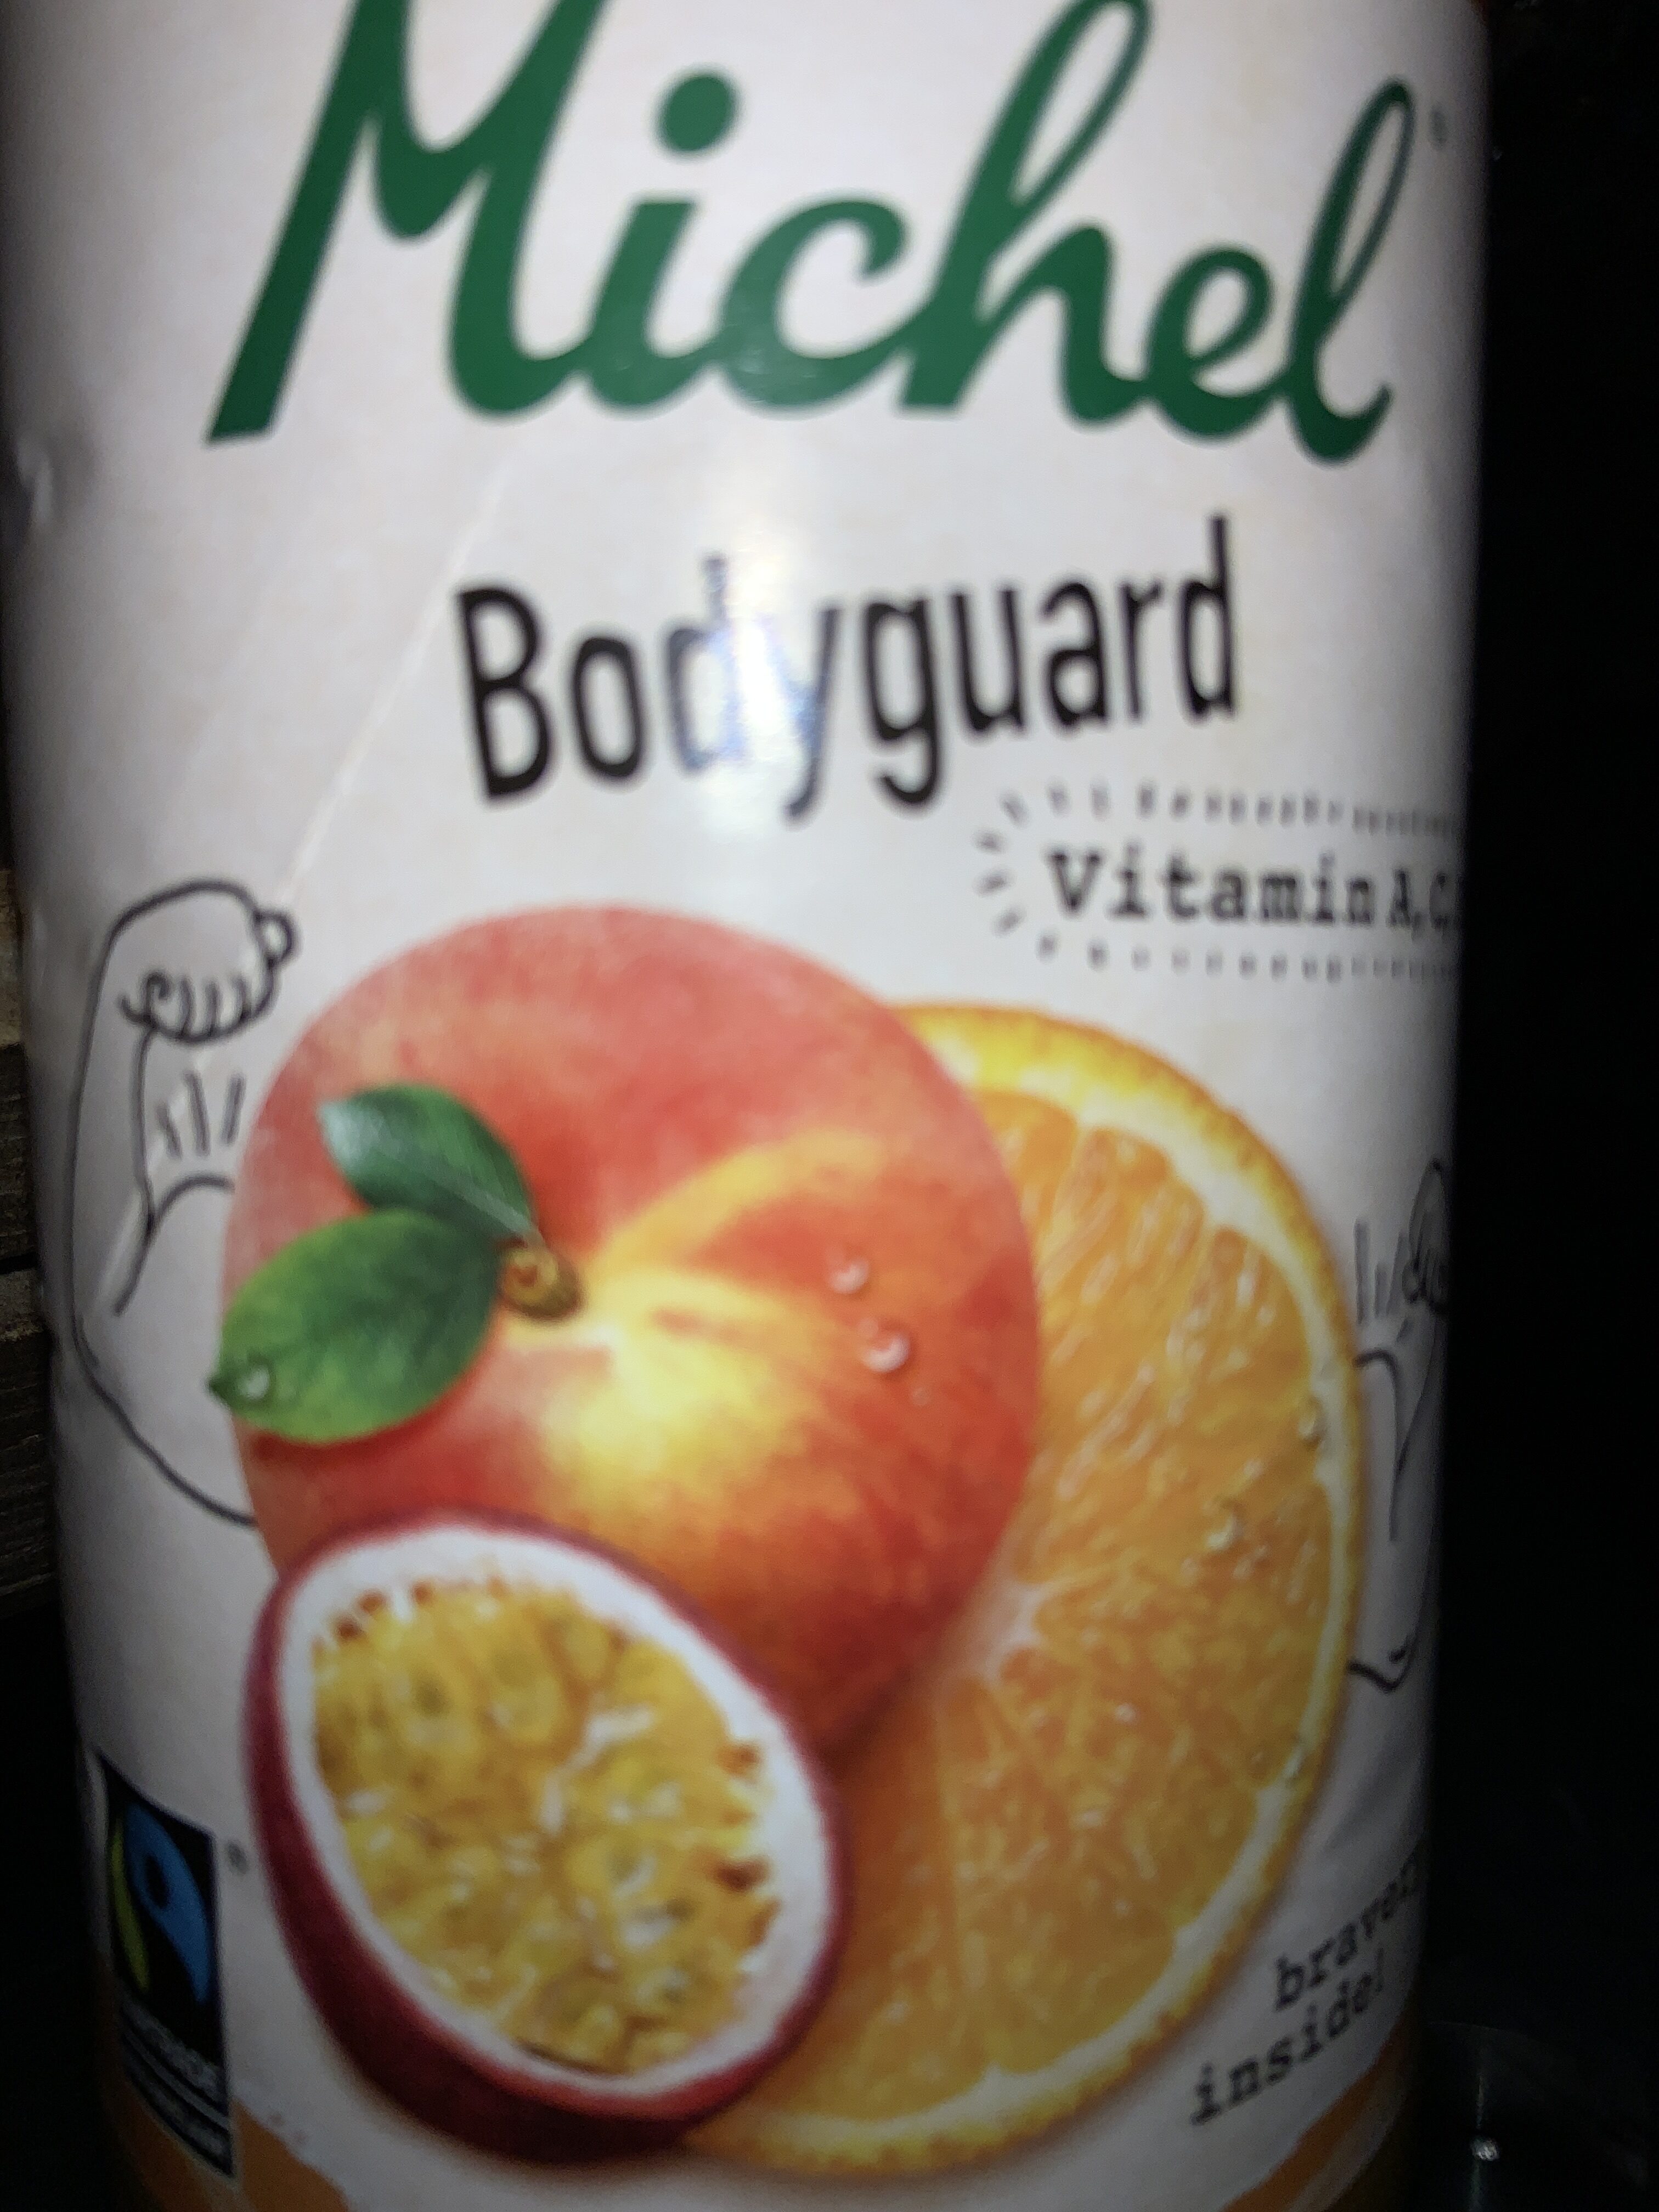 Fairtrade Michel Body Guard De Jus de Fruits - Produkt